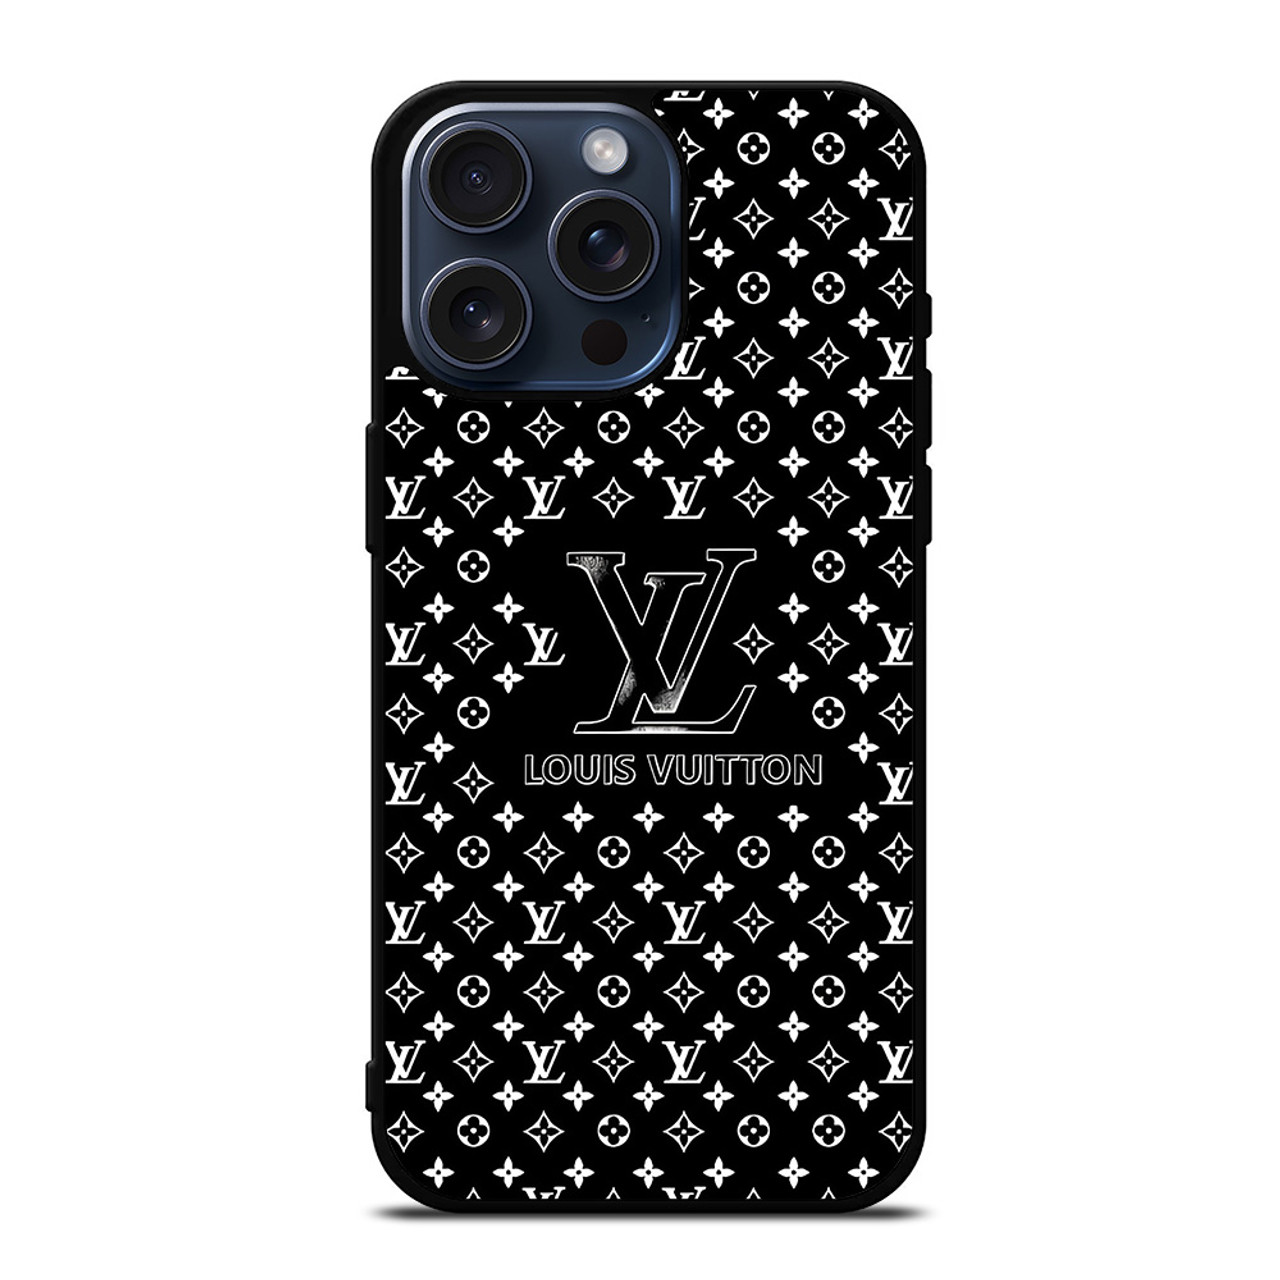 LOUIS VUITTON LV LOGO MELTING iPhone XR Case Cover